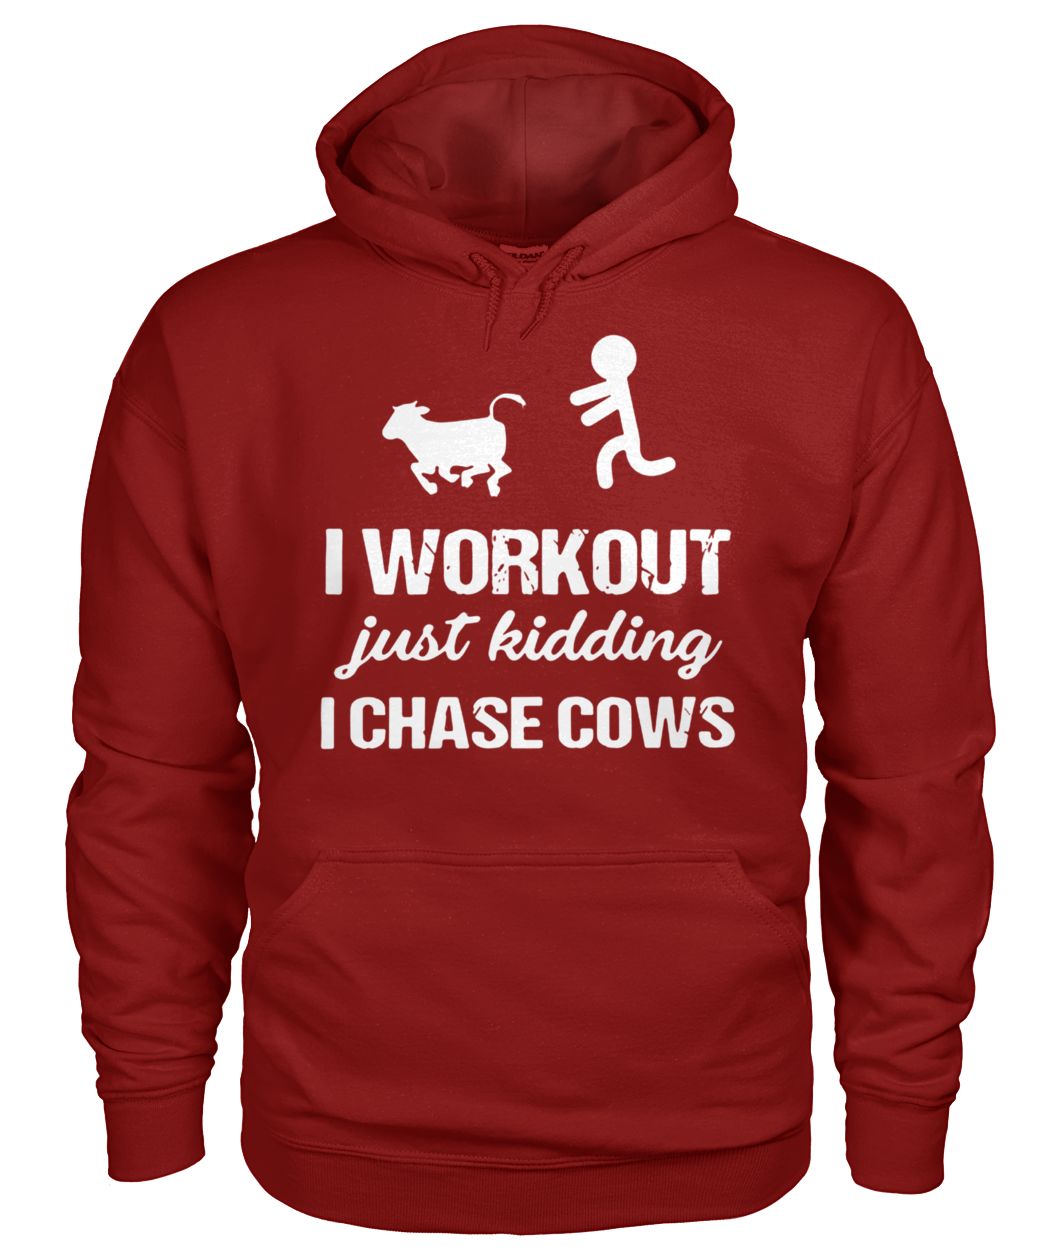 I workout just kidding I chase cows gildan hoodie